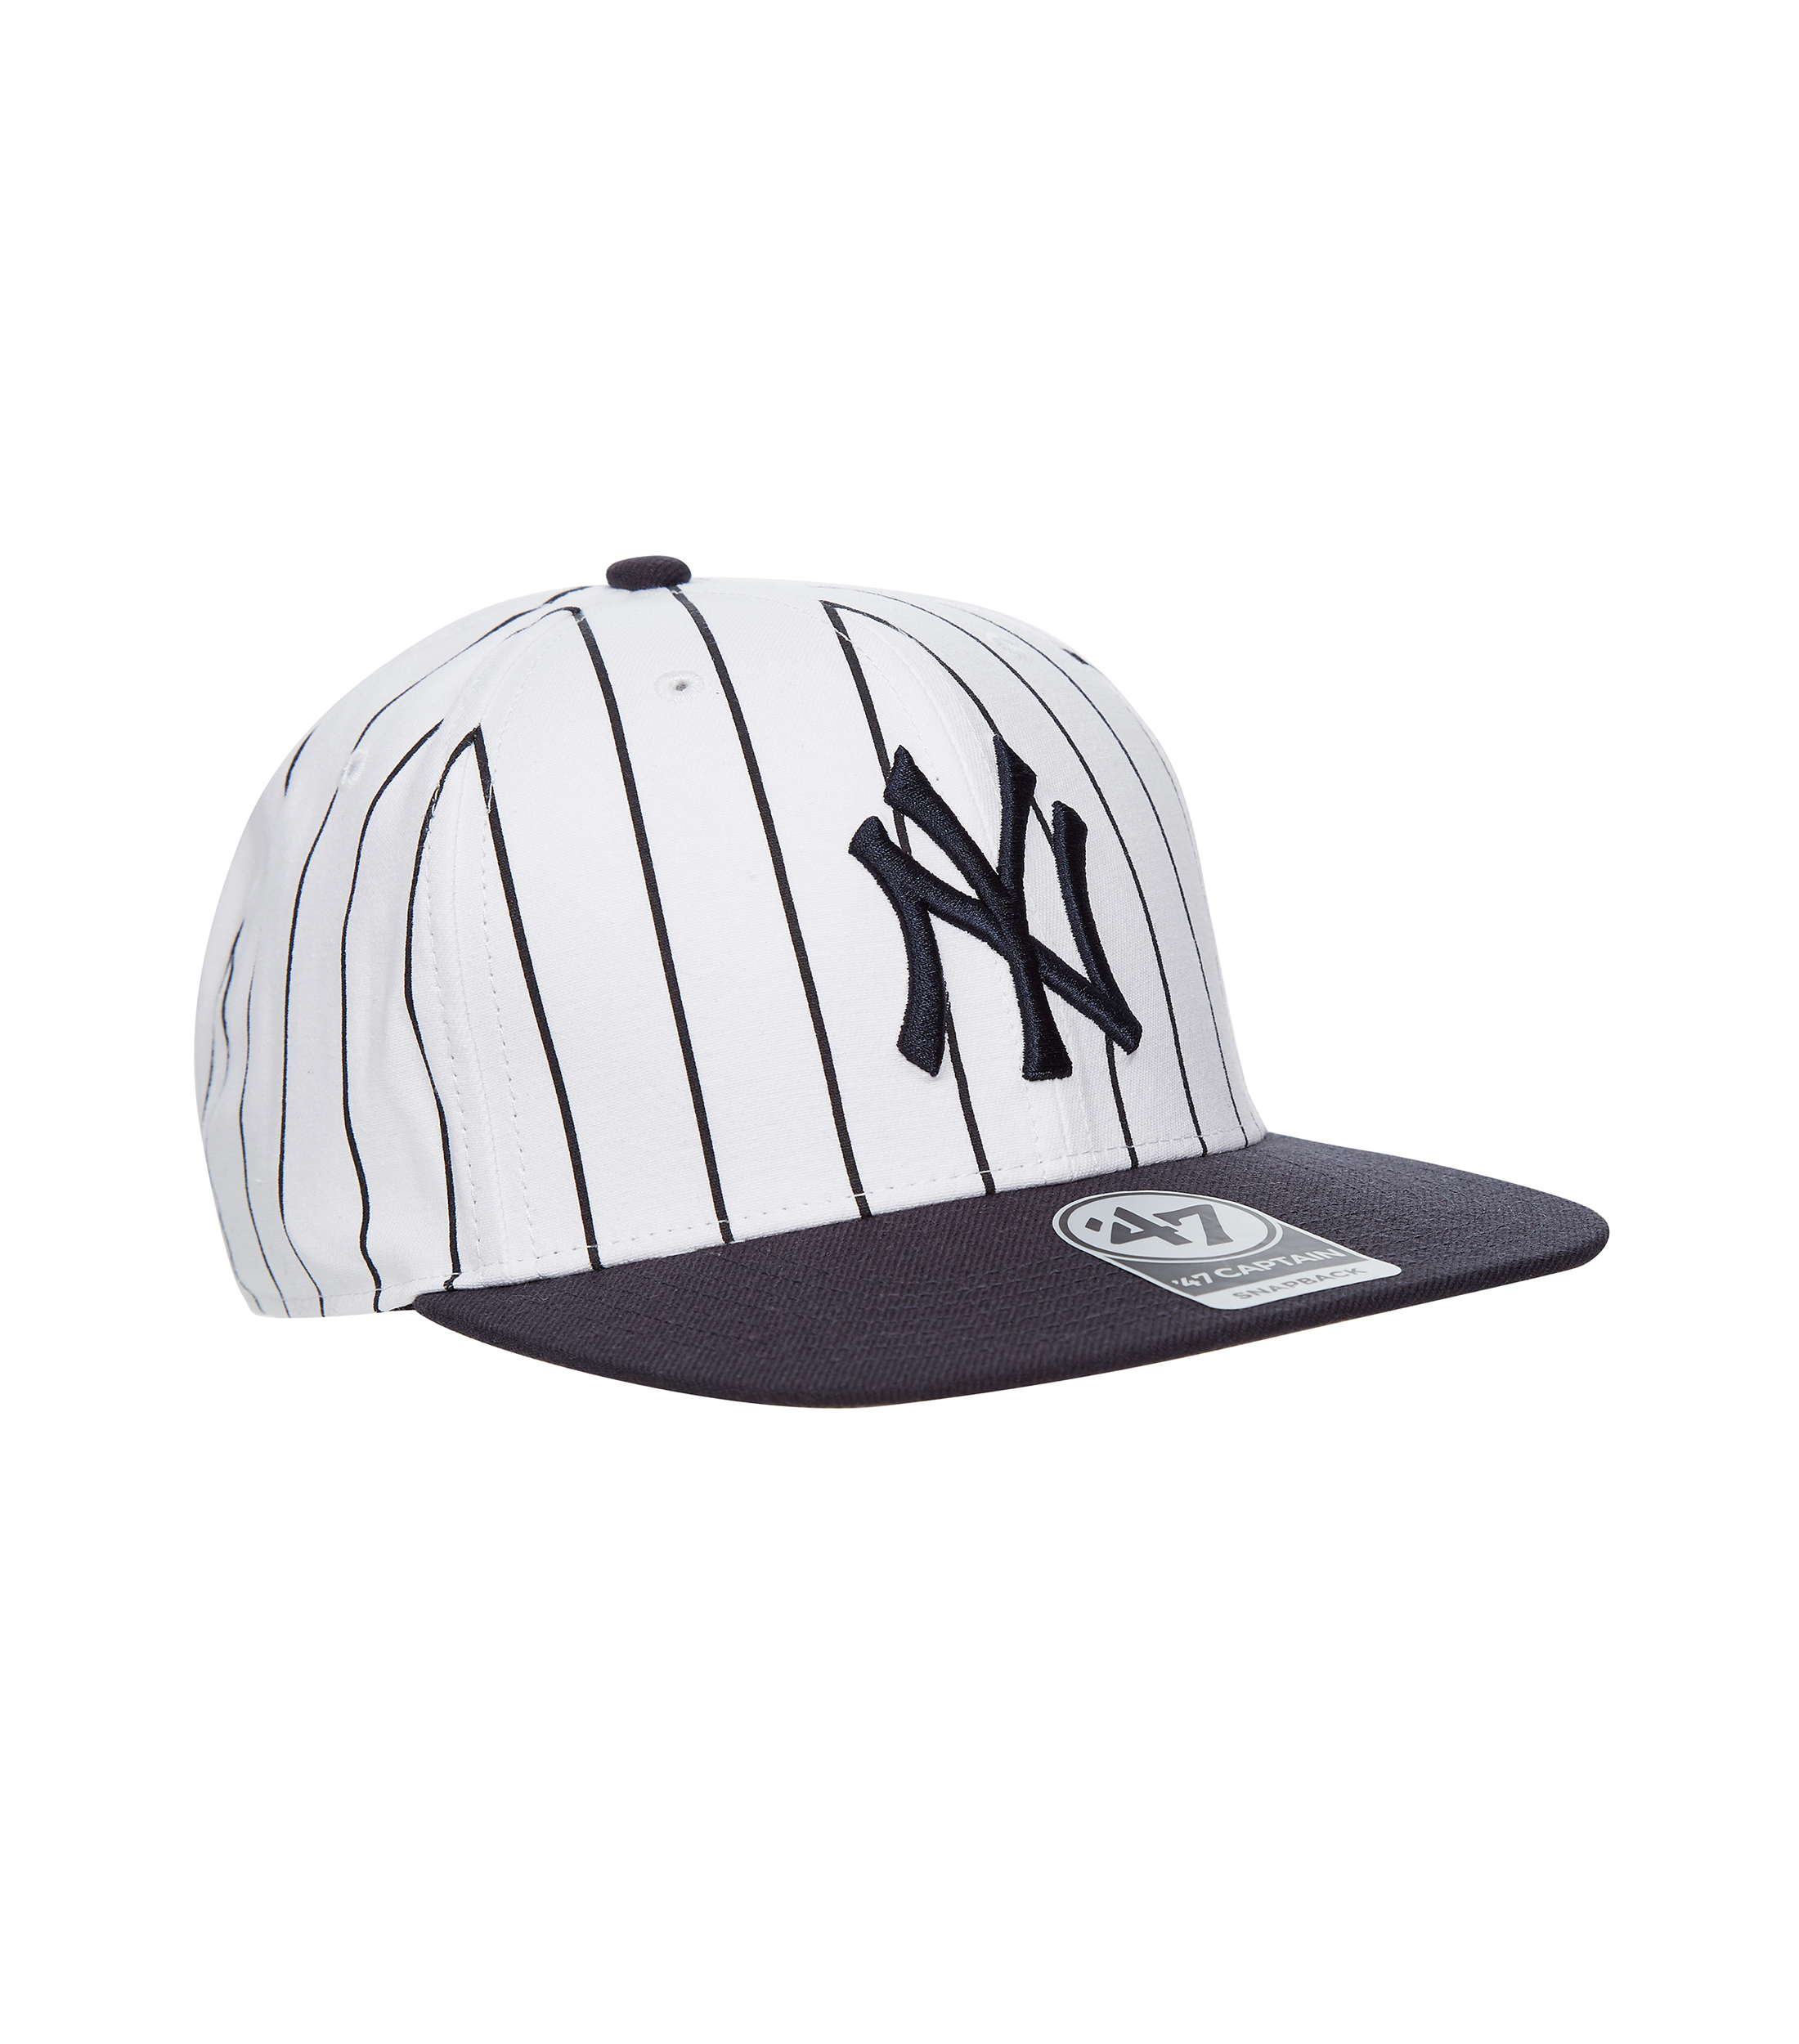 Gorra De Los Yankees Flash Sales - deportesinc.com 1688497070